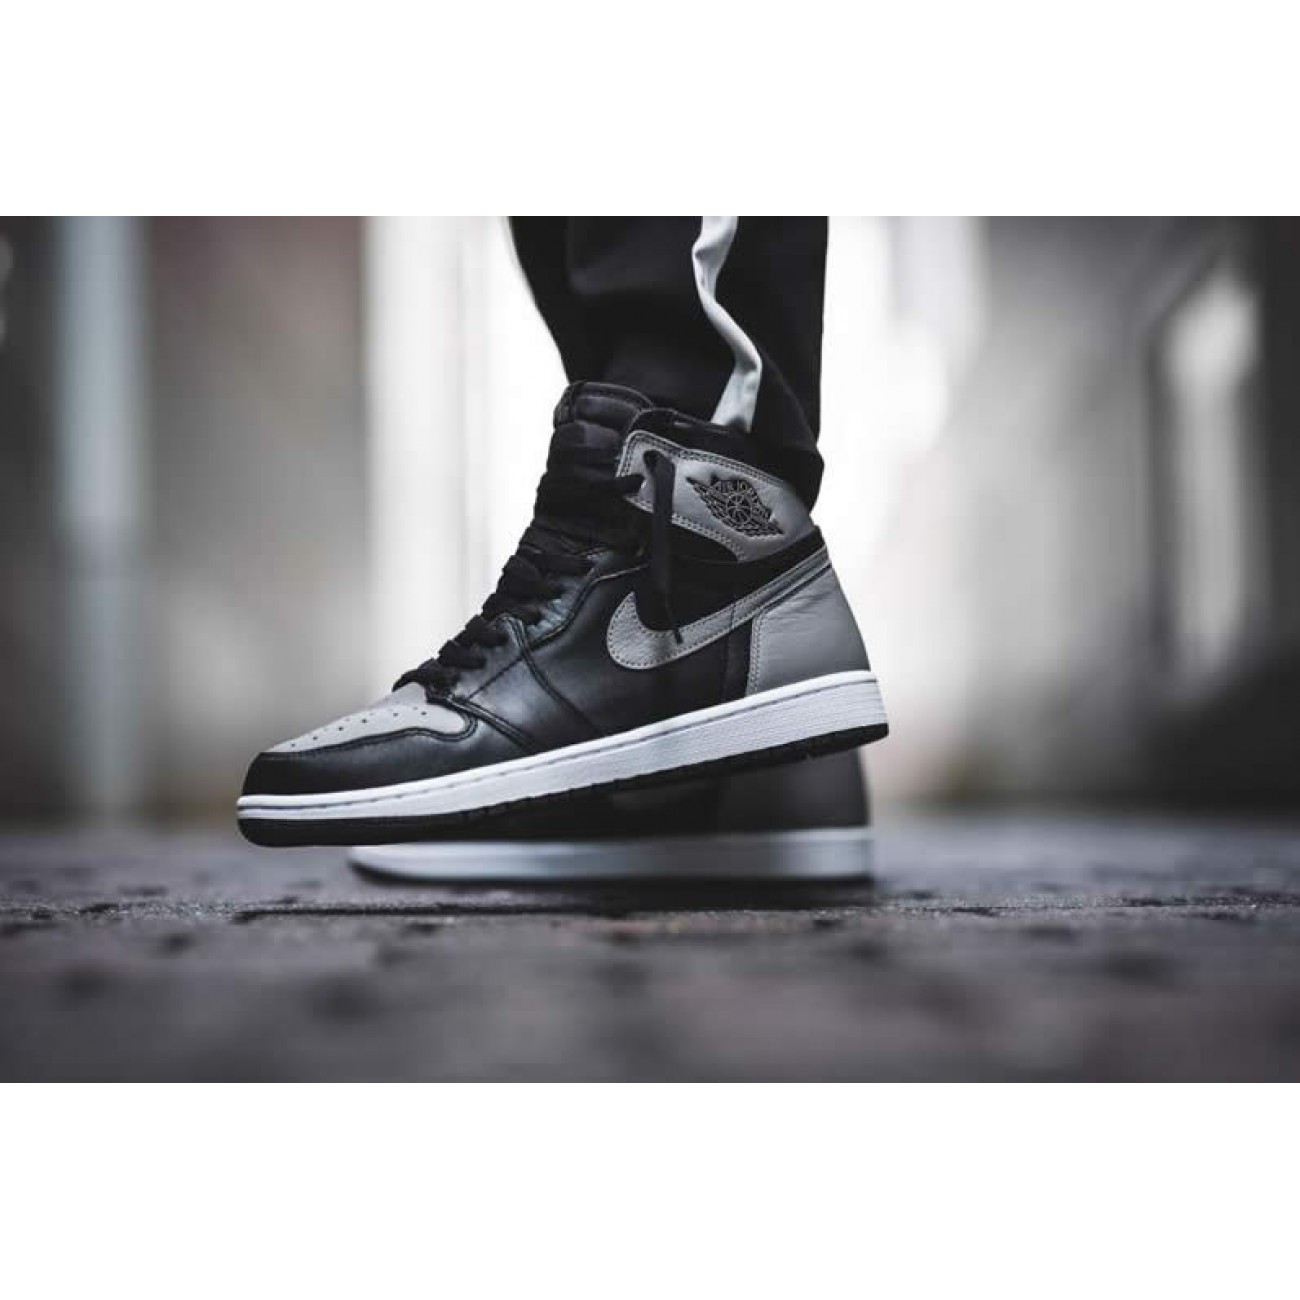 Air Jordan 1 Shadow Grey 2018 On Feet Mens GS Outfit Shoes 555088-013